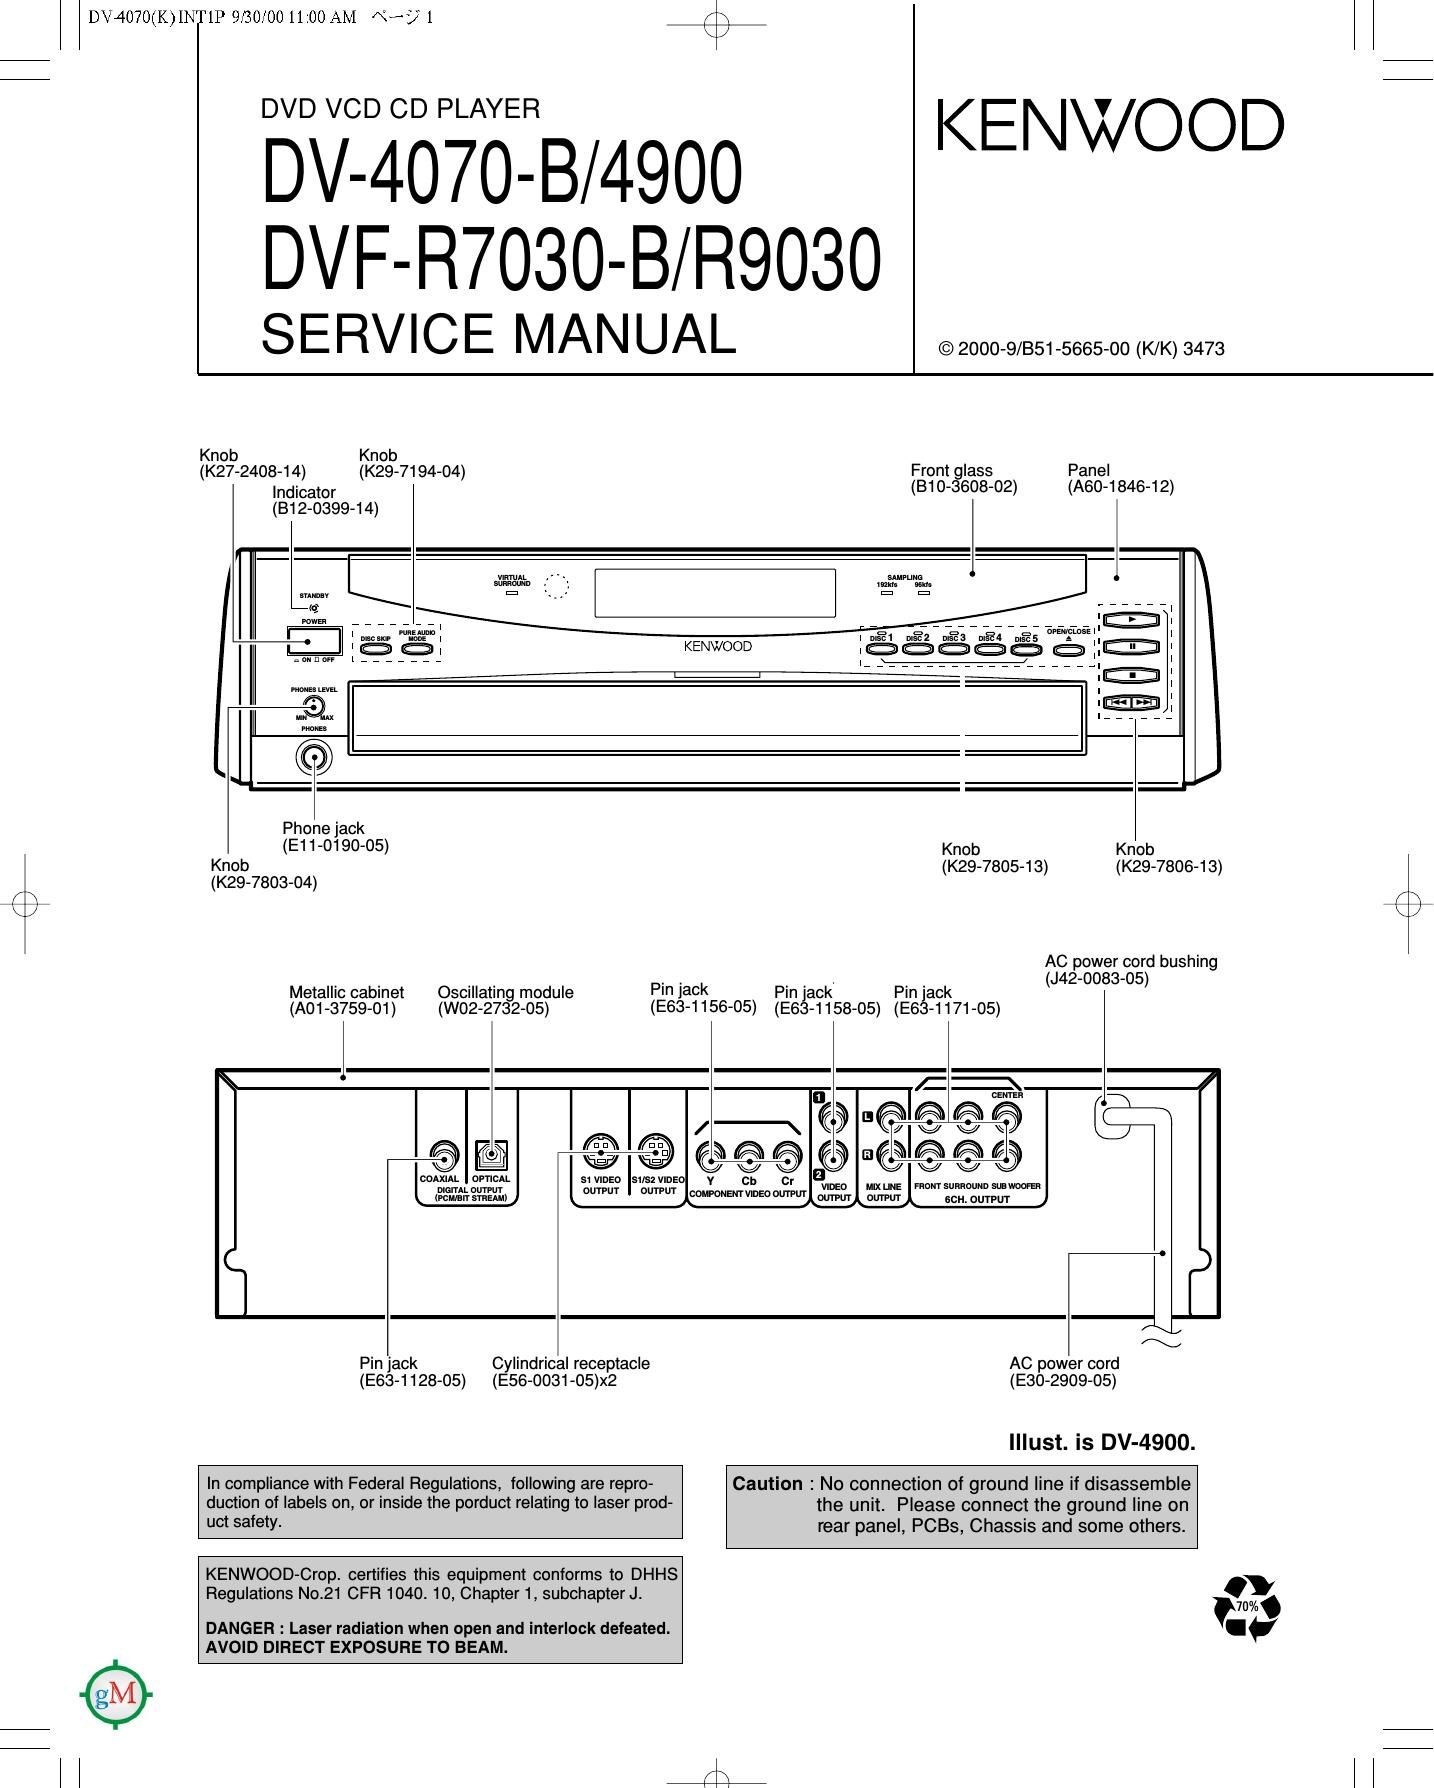 Kenwood DVFR 7030 Service Manual